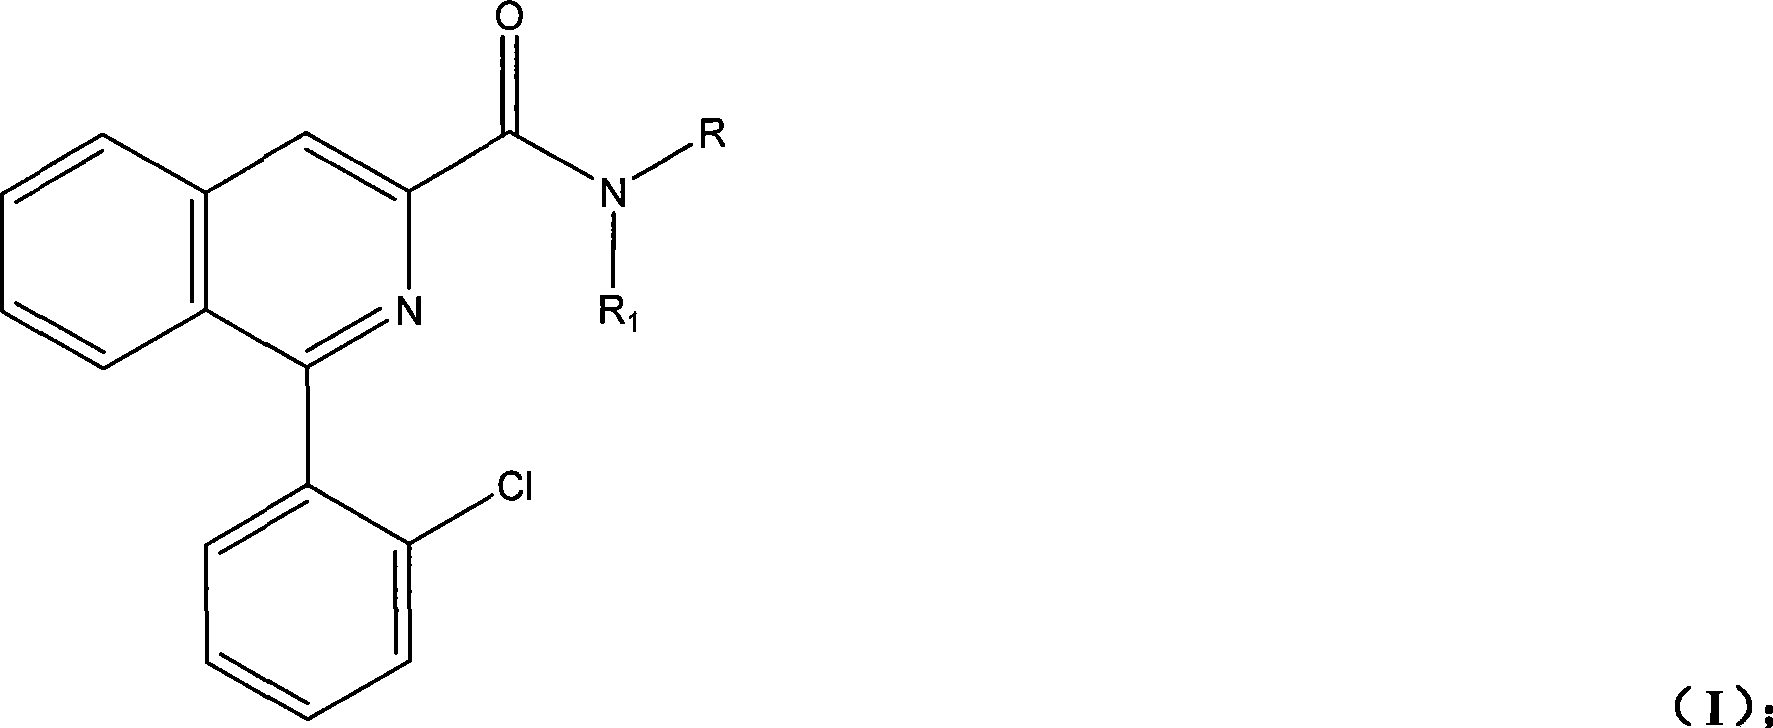 Synthesis of PET imaging agent prosome isoquinoline methanamide derivant